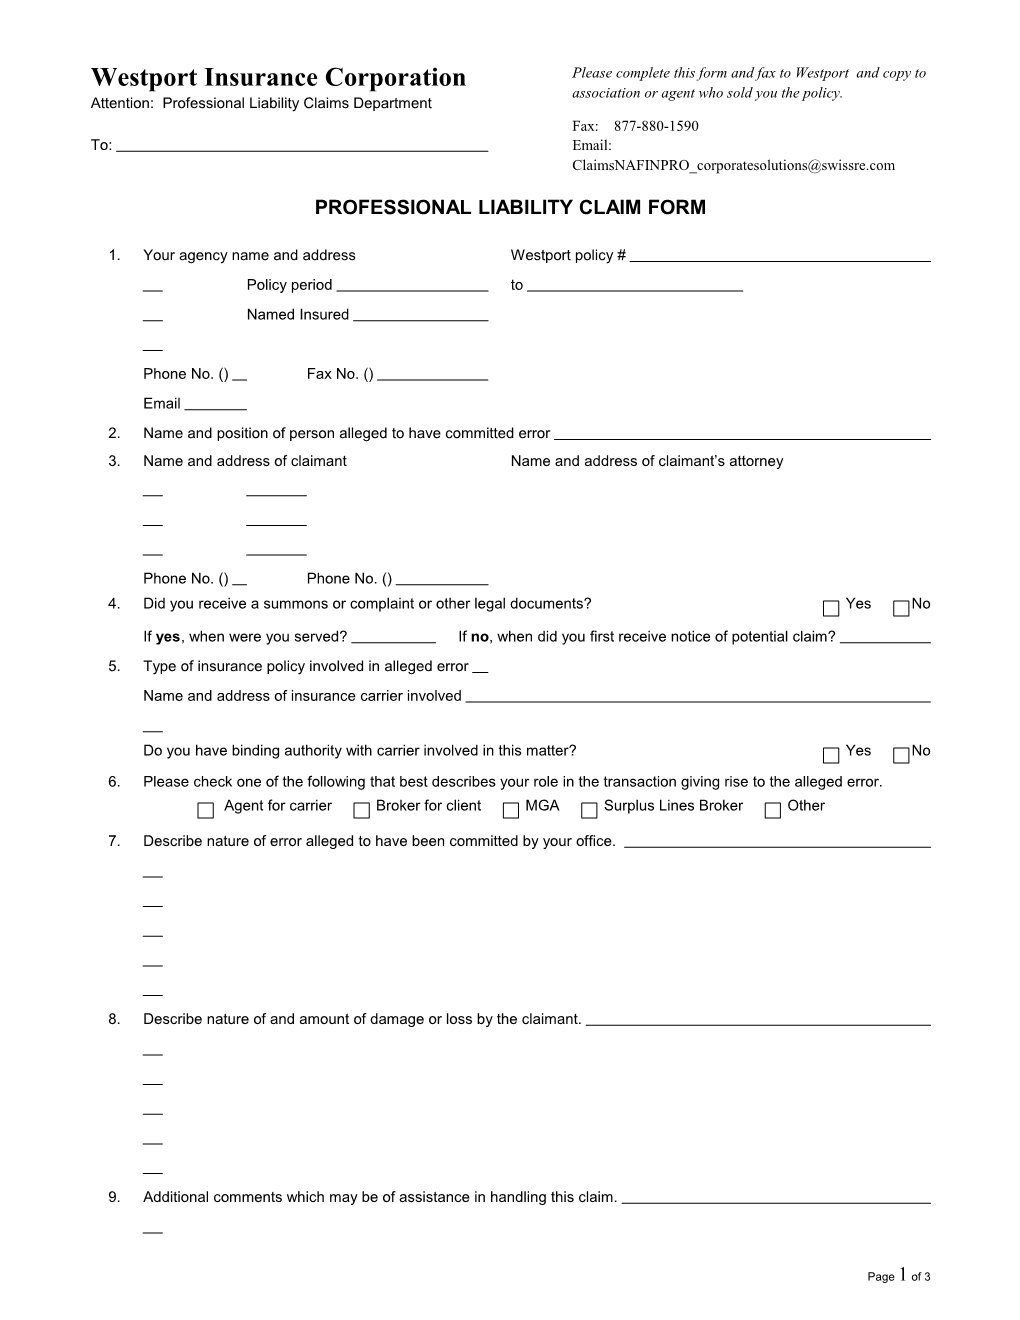 Professional Liability Claim Form